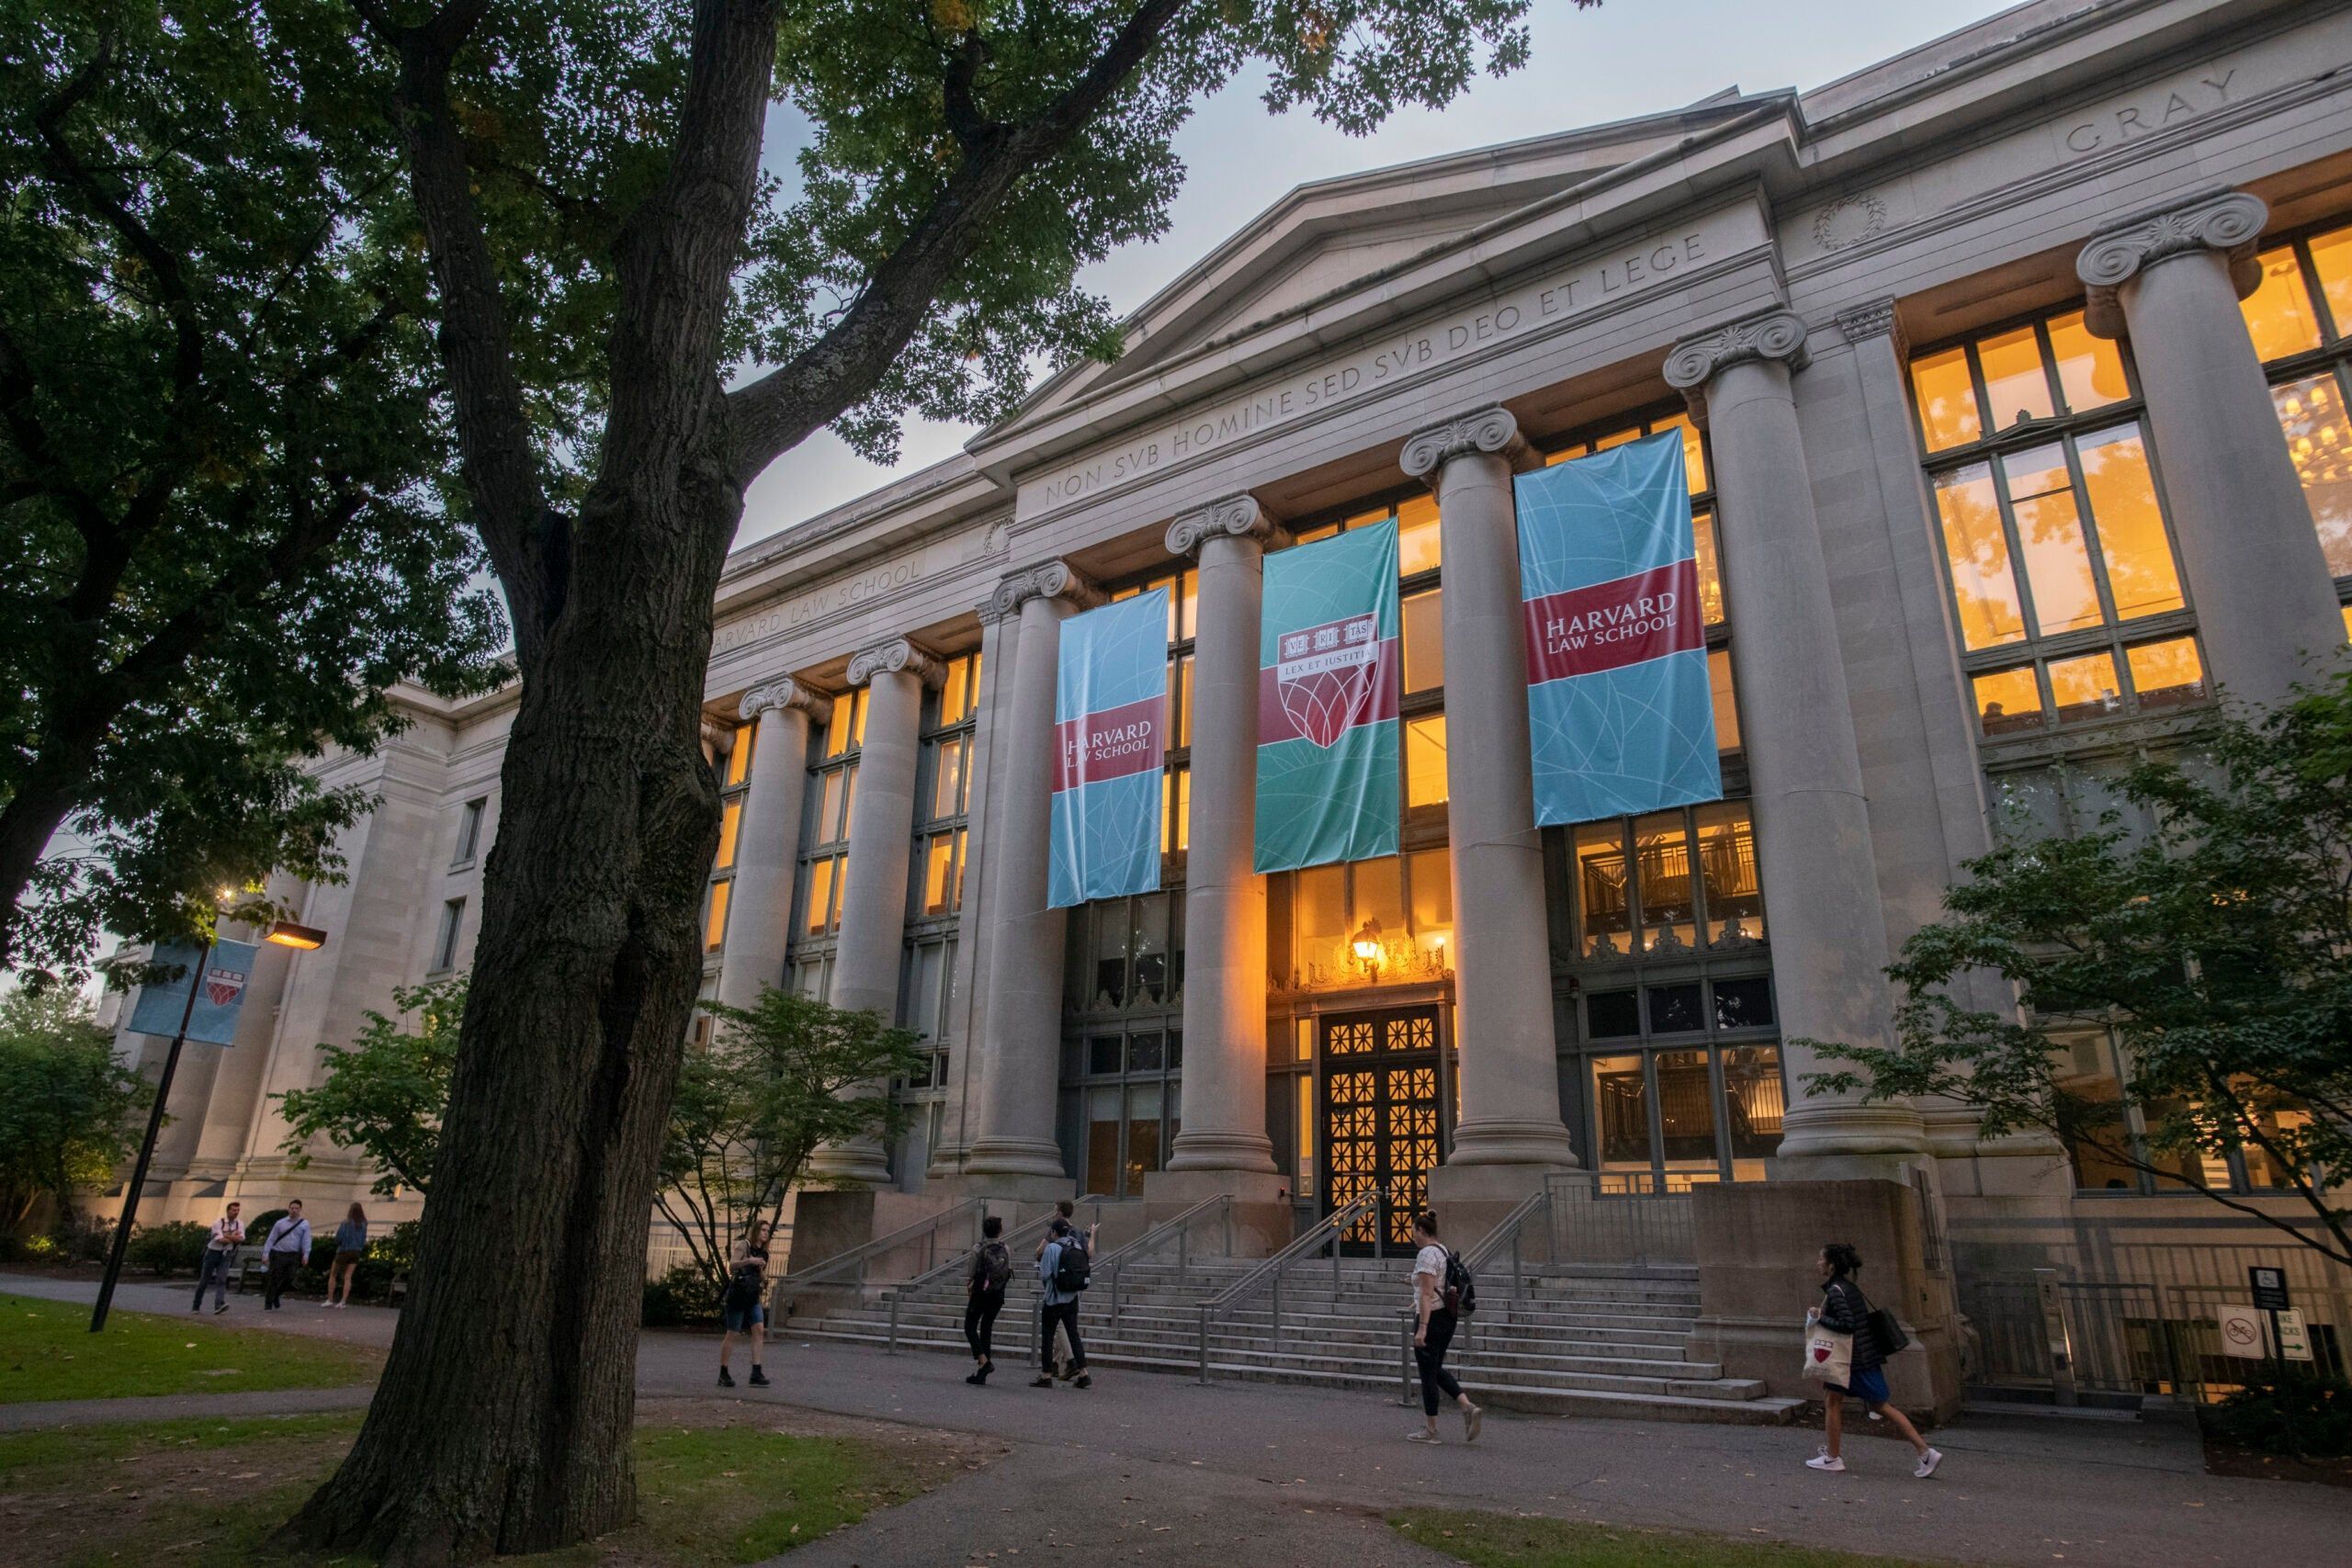 Apply to Harvard Law School Law School. Harvard Law School